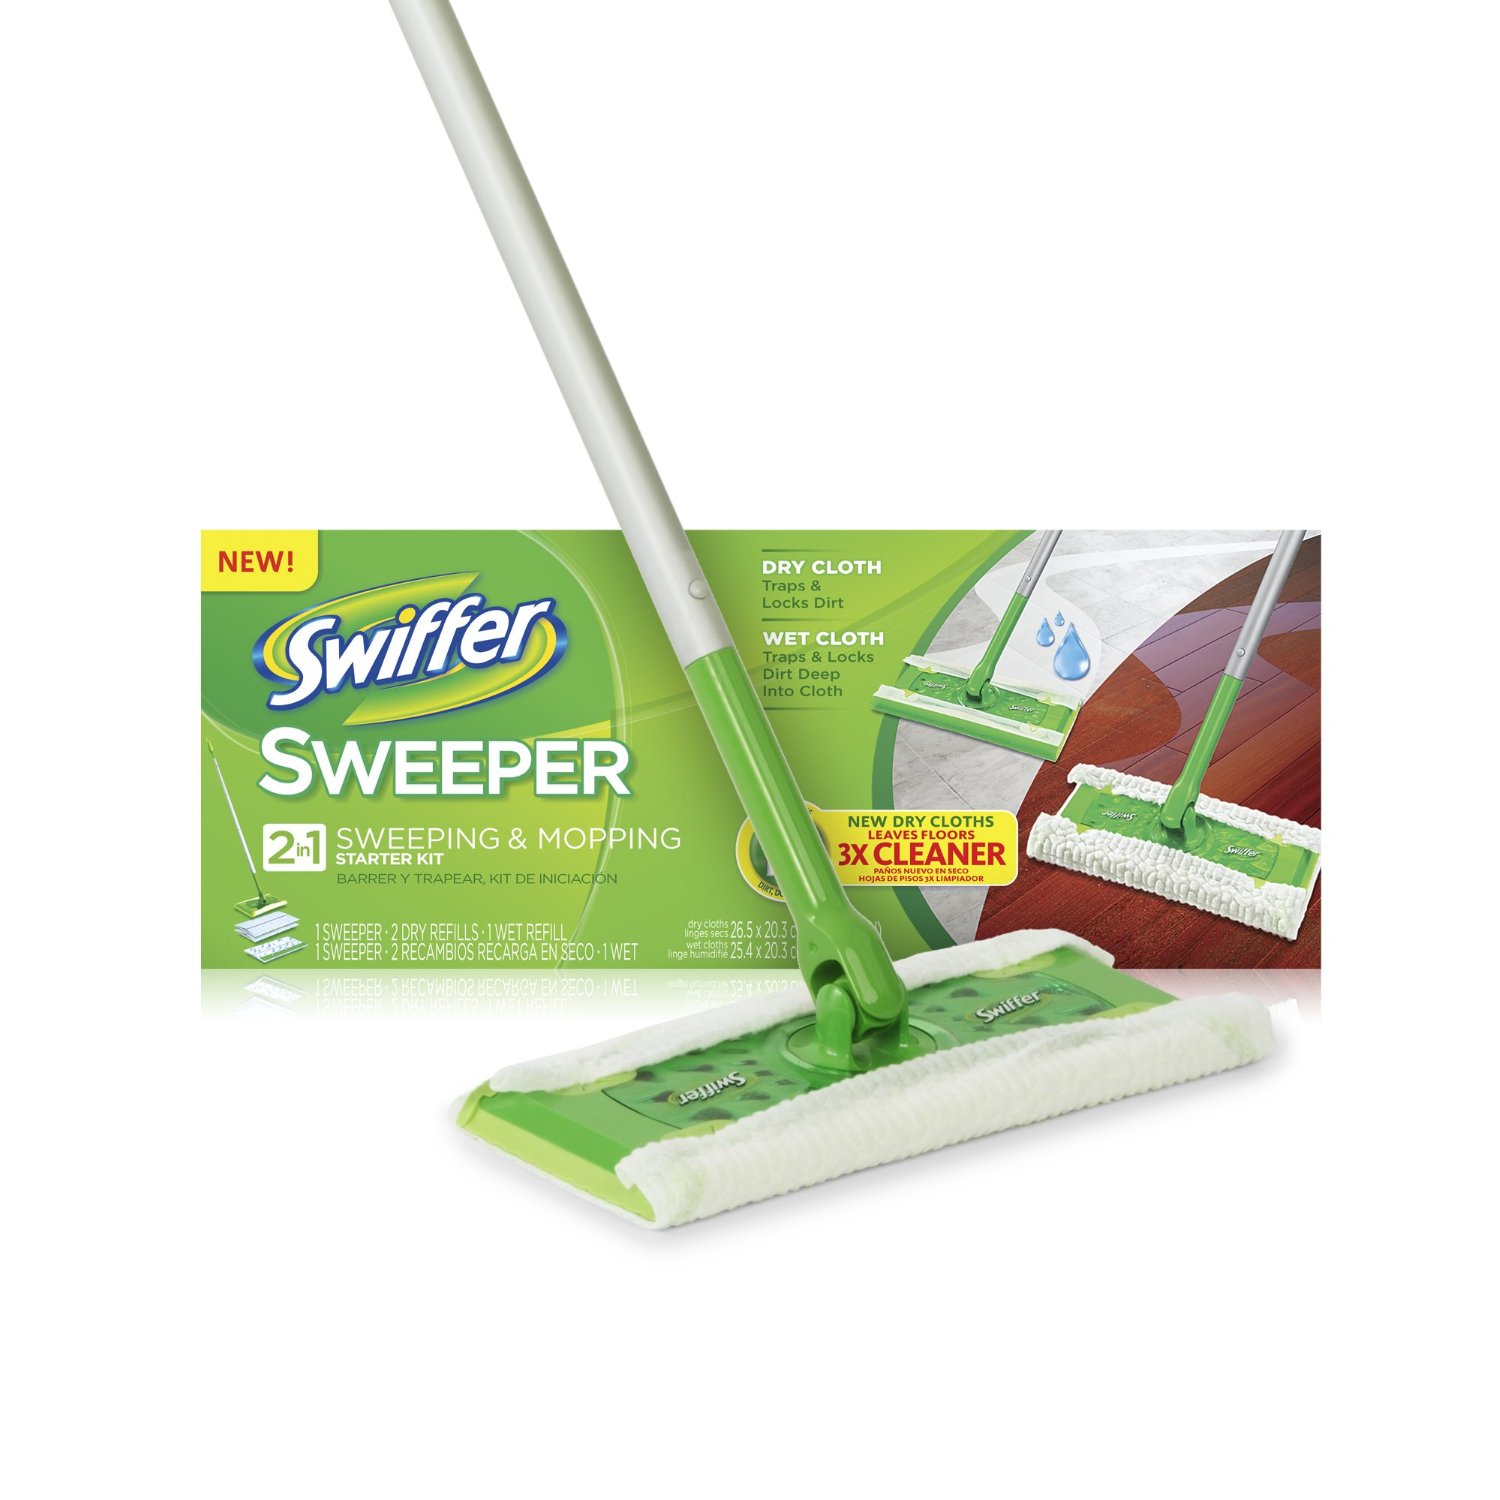 Swiffer Sweeper 2 in 1 Mop and Broom Floor Cleaner Starter Kit $6.99